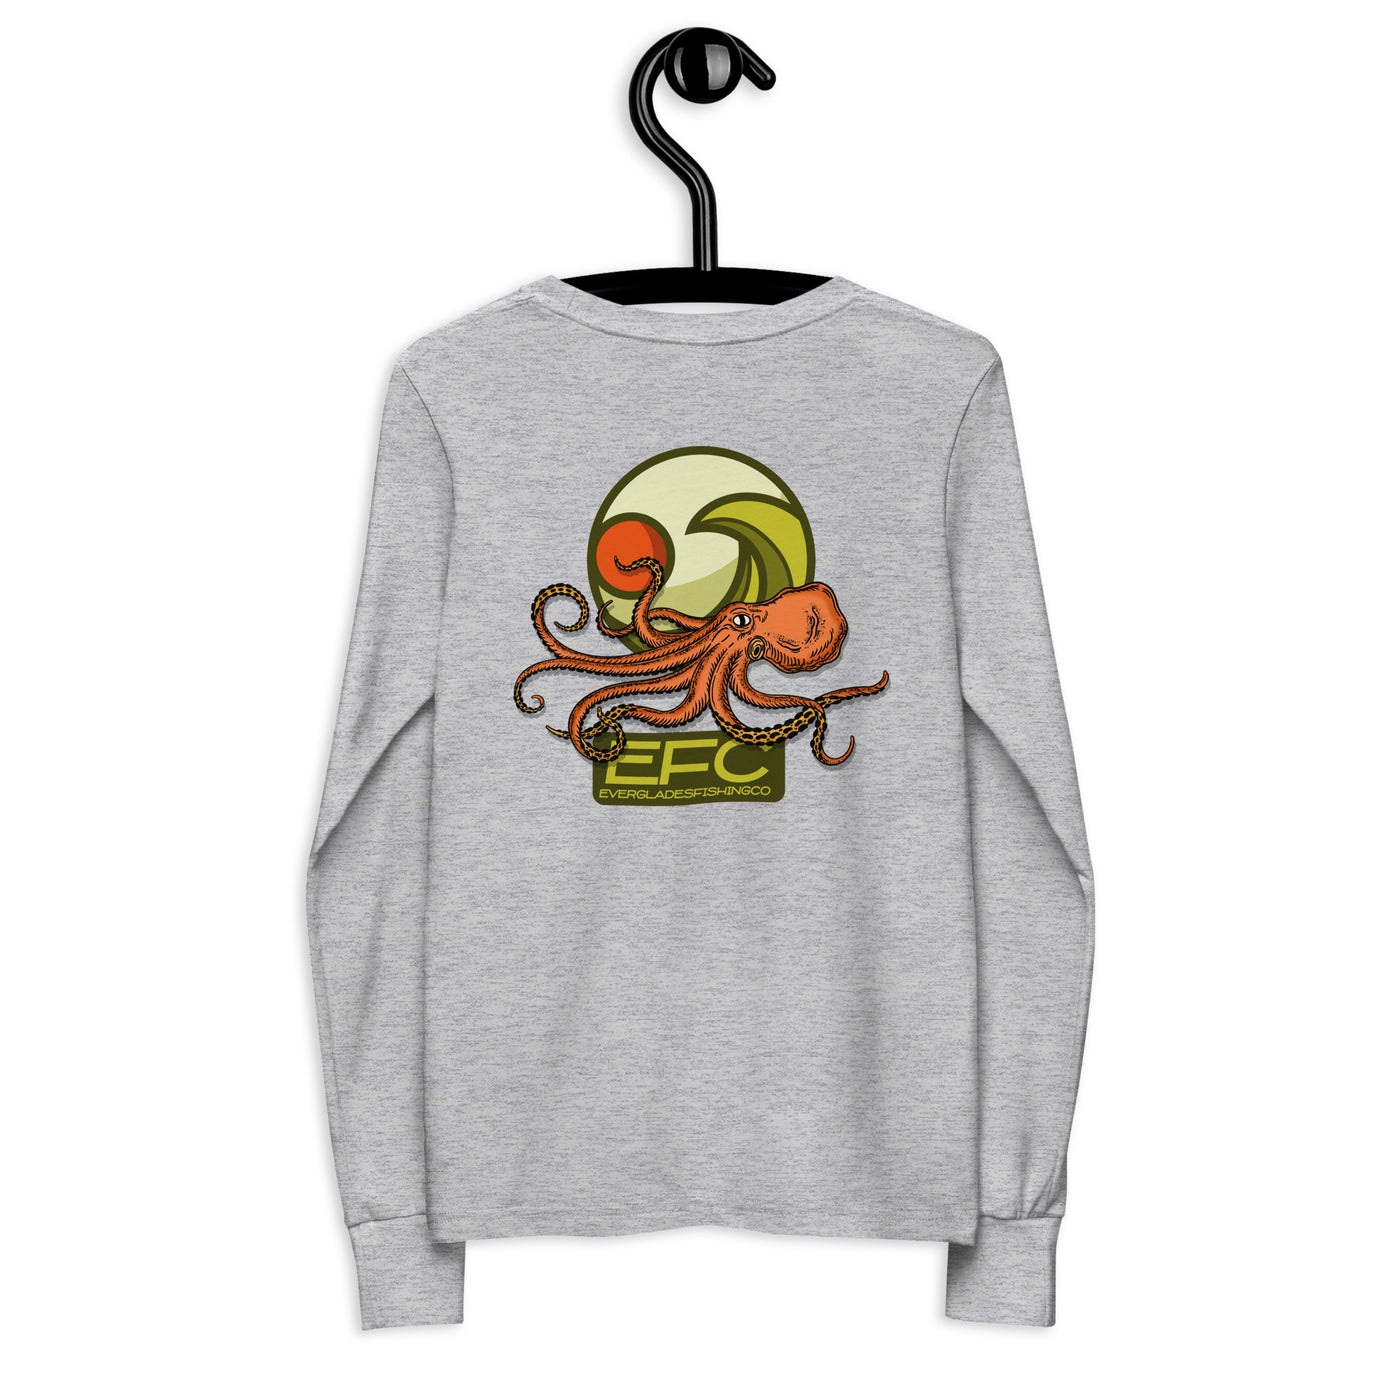 Octopus Youth long sleeve tee